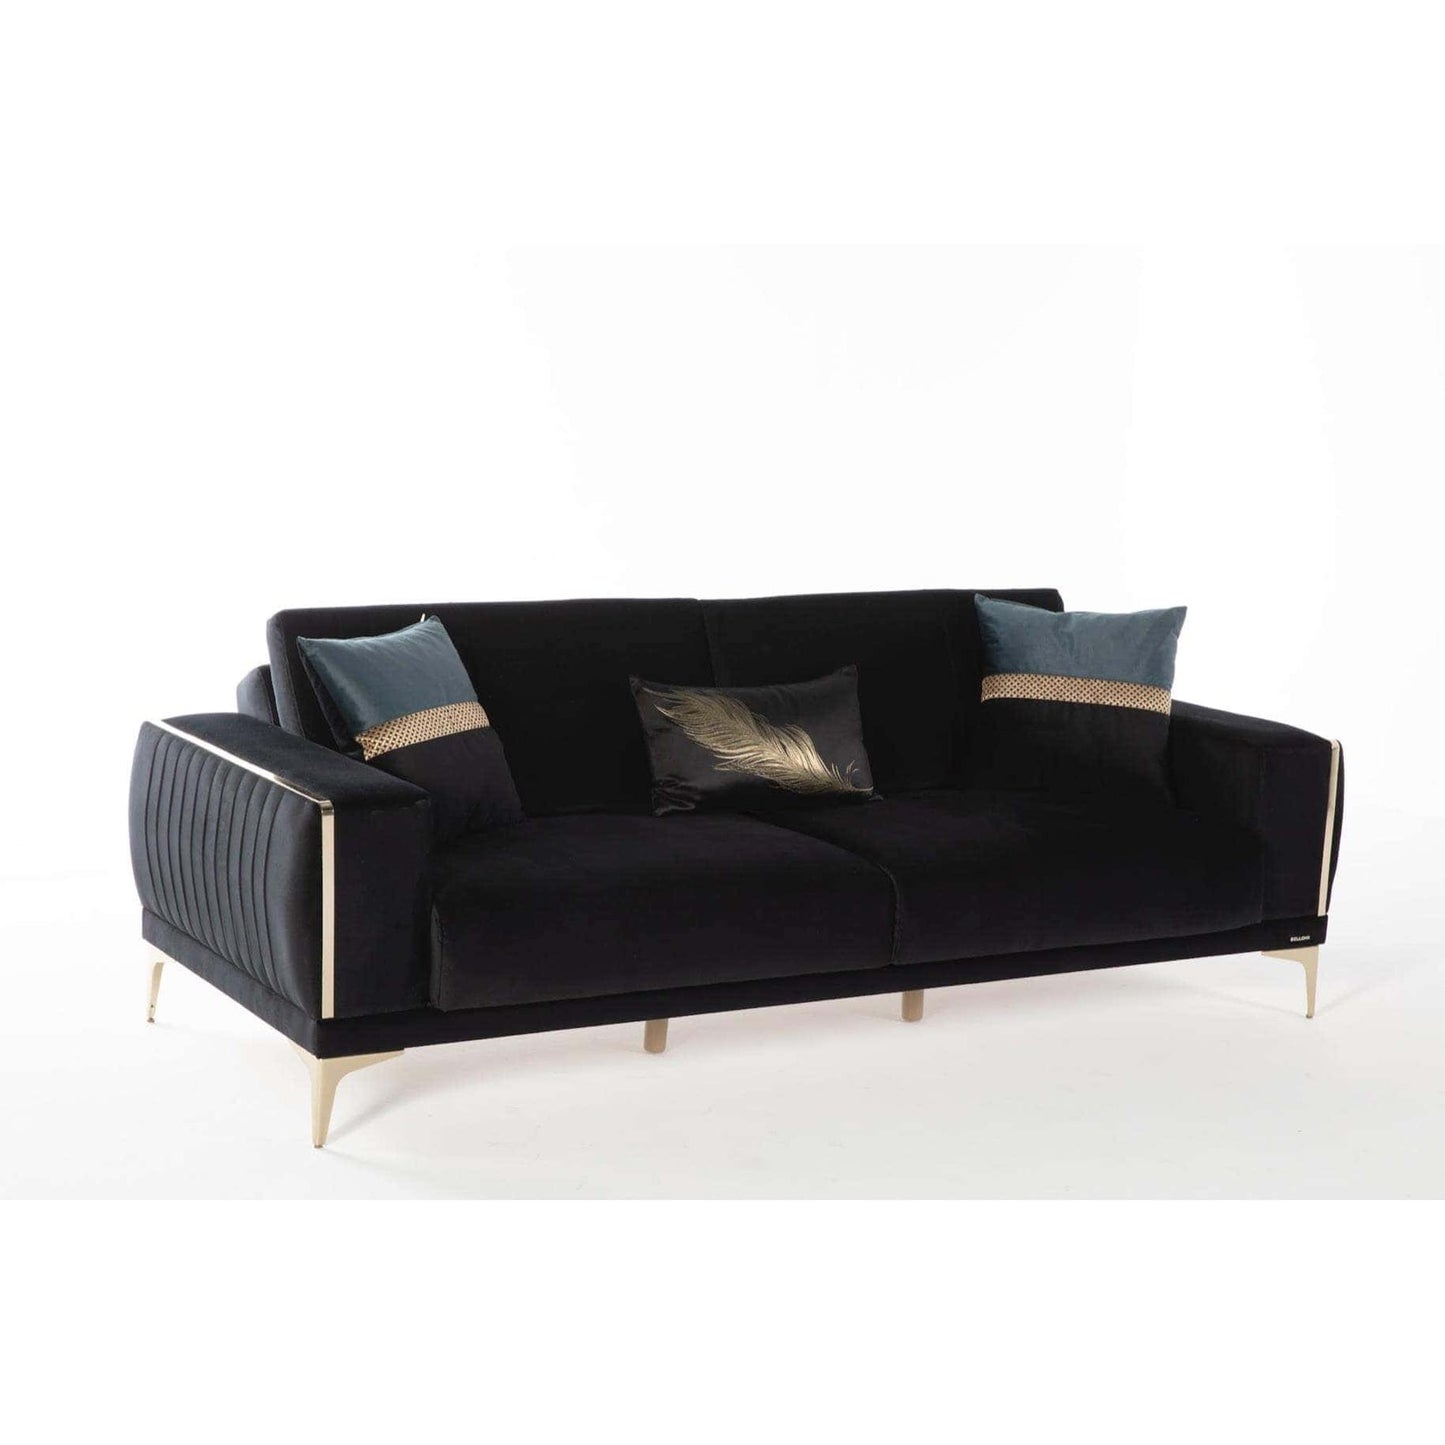 Carlino Sleeper Sofa Bed in Napoly Black